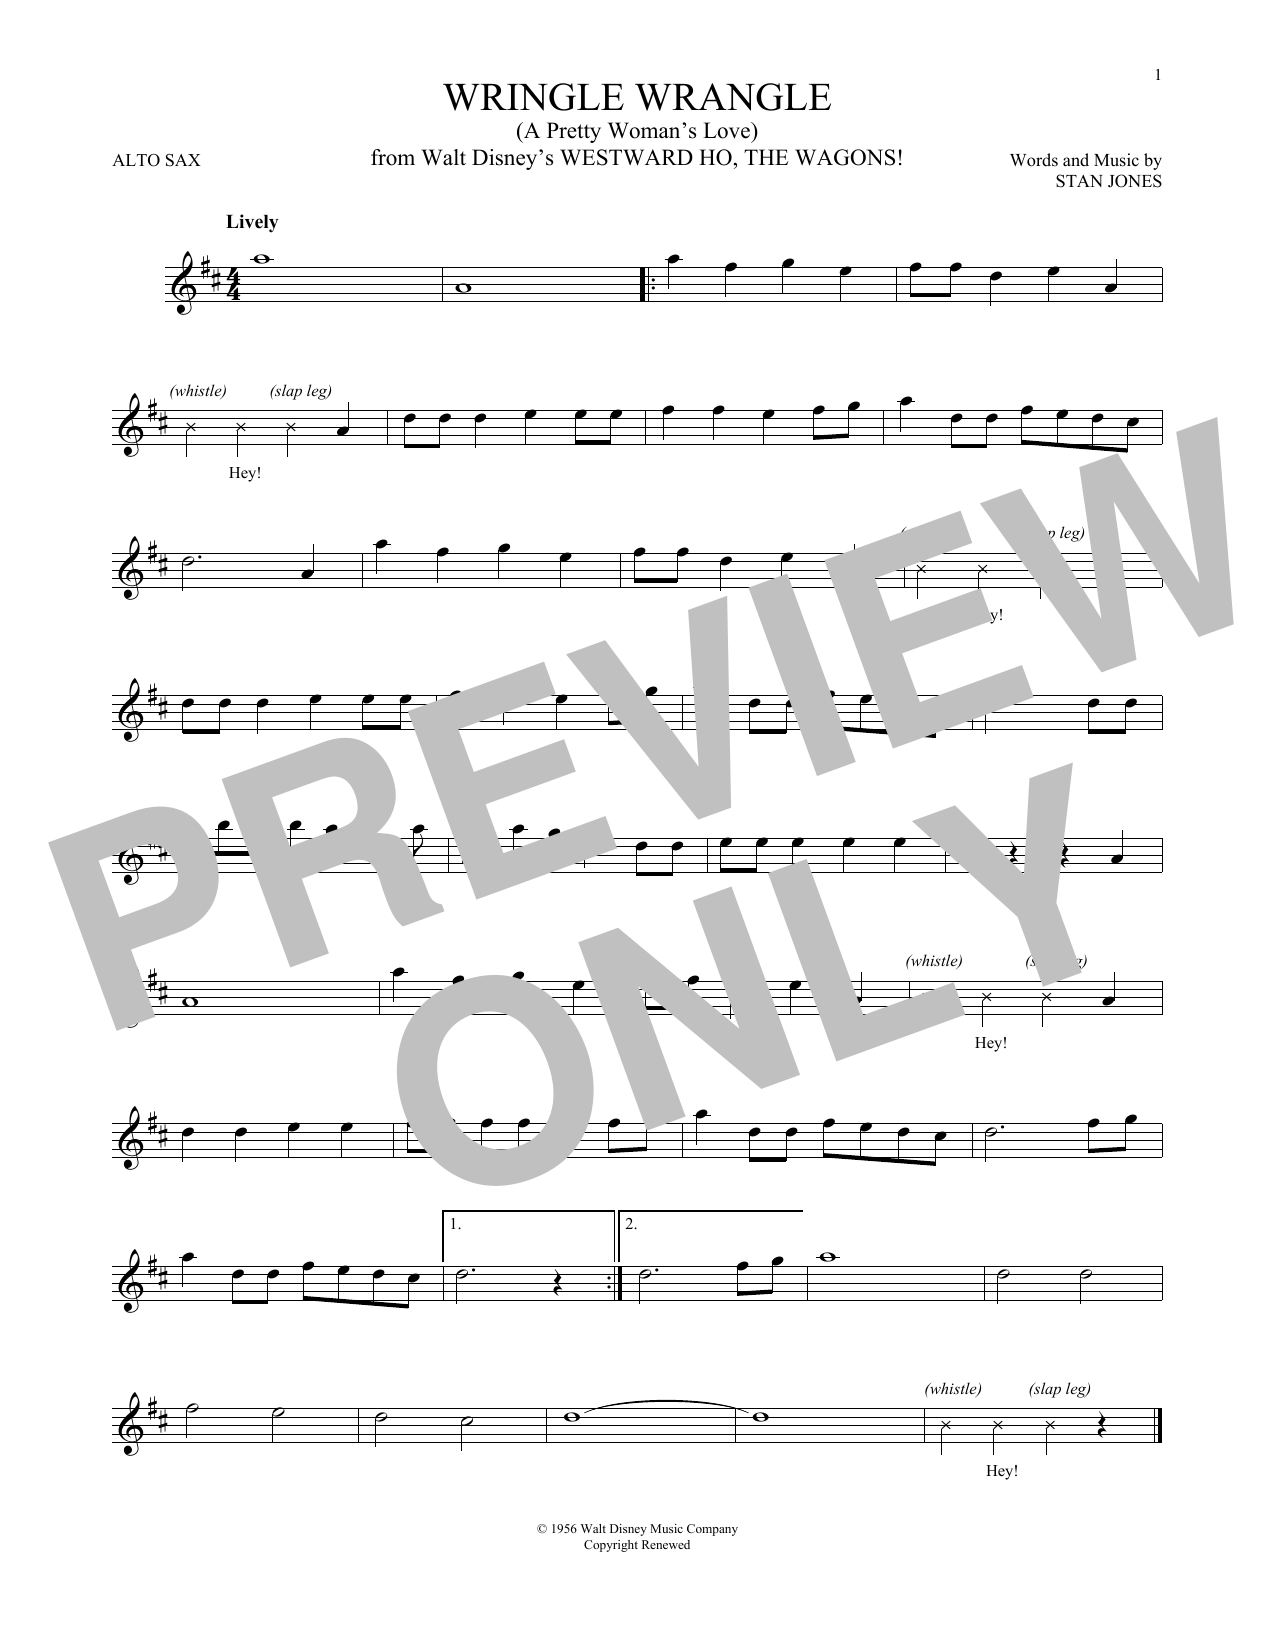 Stan Jones Wringle Wrangle (A Pretty Woman's Love) Sheet Music Notes & Chords for Alto Saxophone - Download or Print PDF